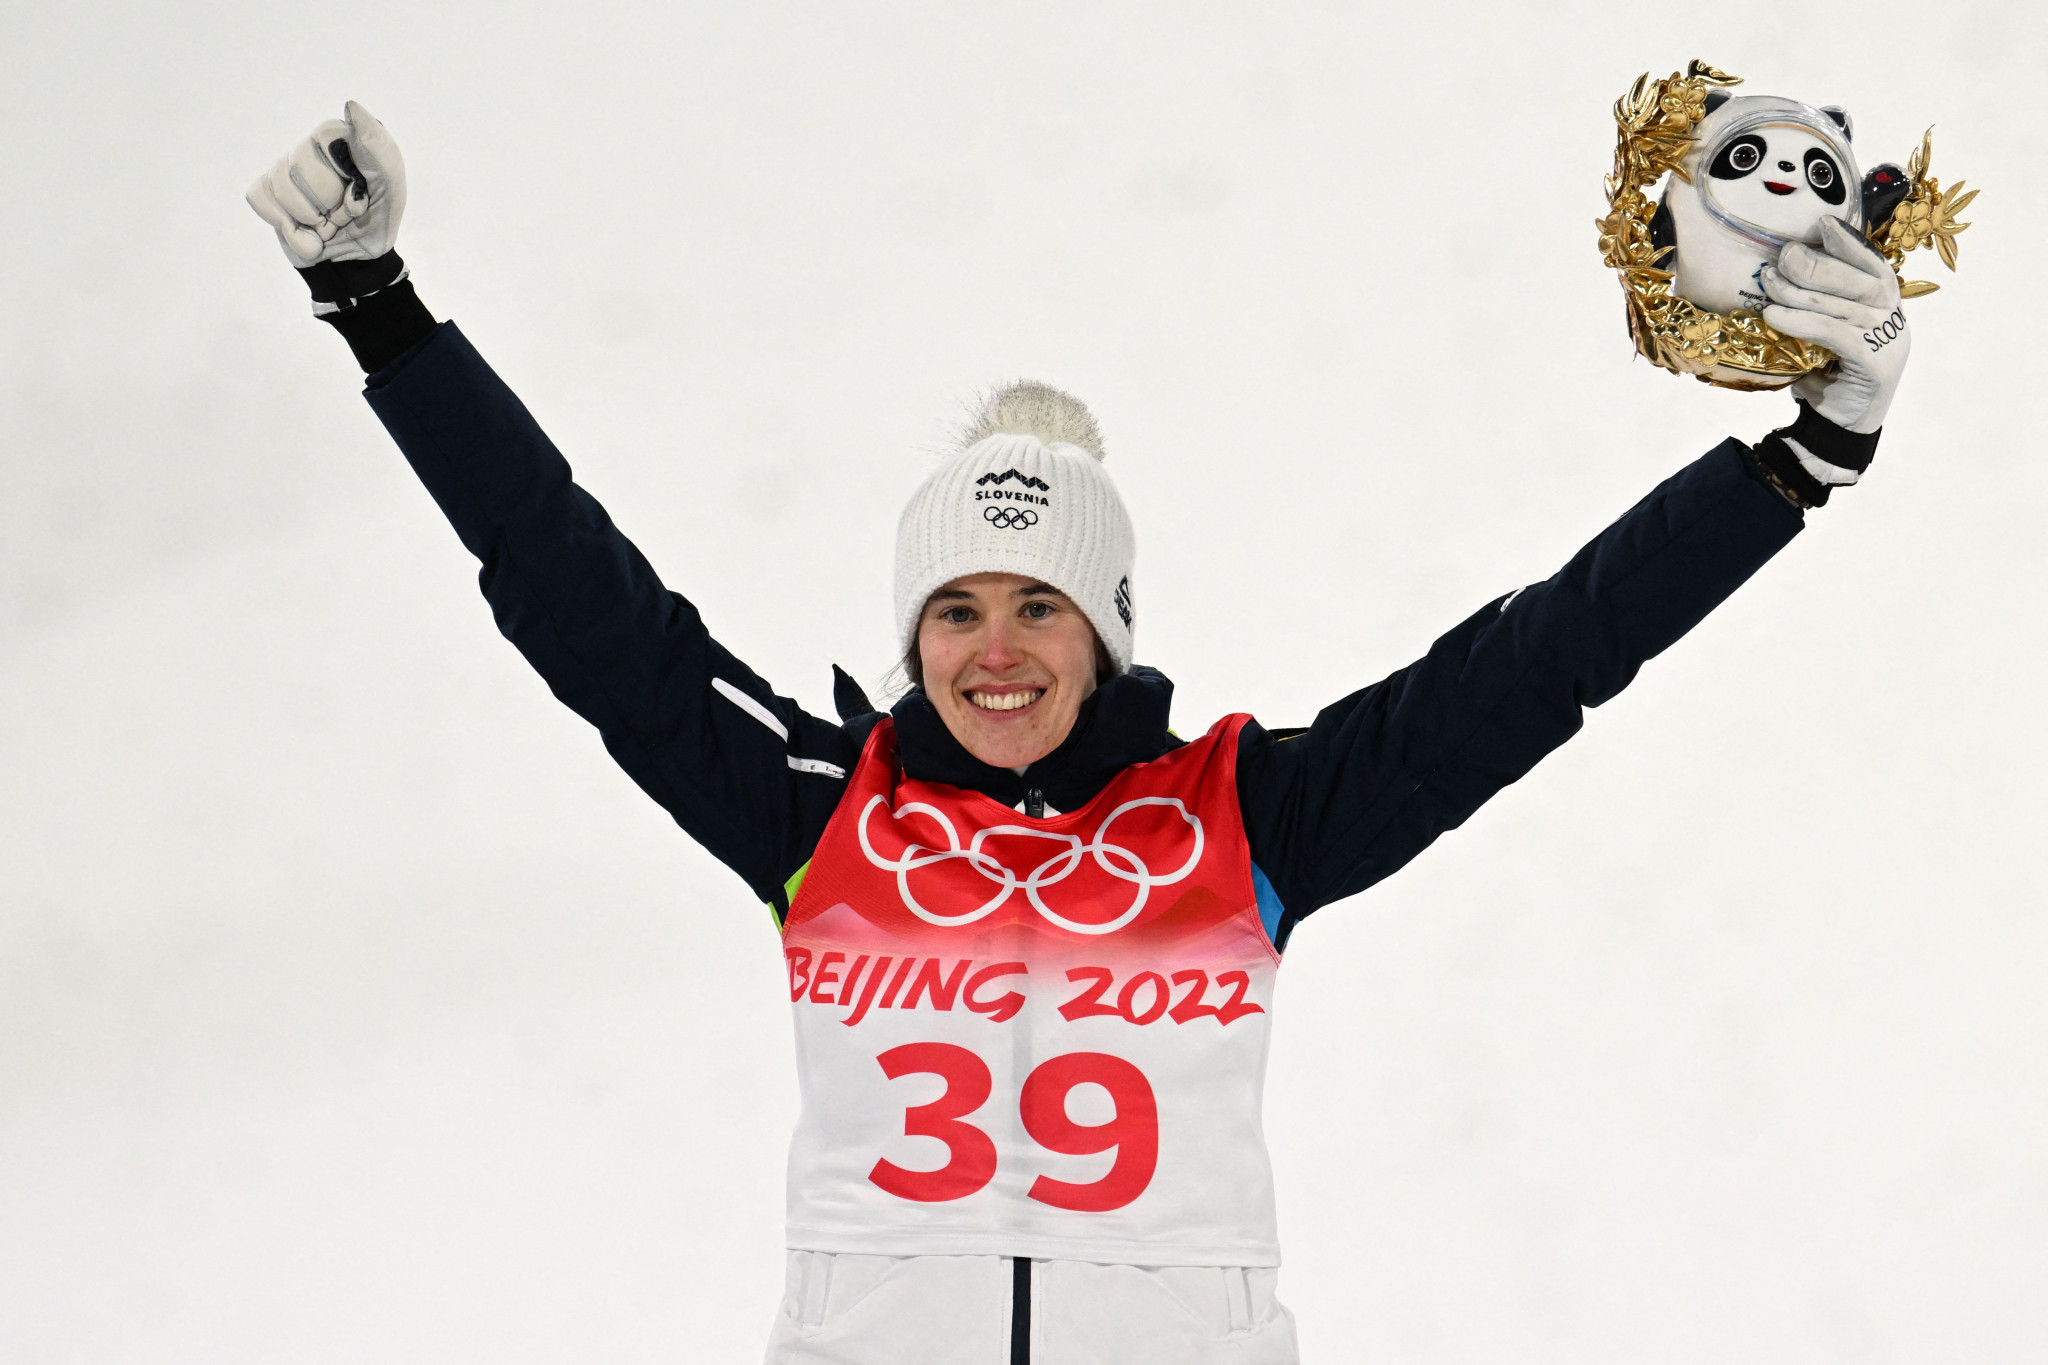 Urša Bogataj won the women's ski jumping title at Beijing 2022 ©Getty Images